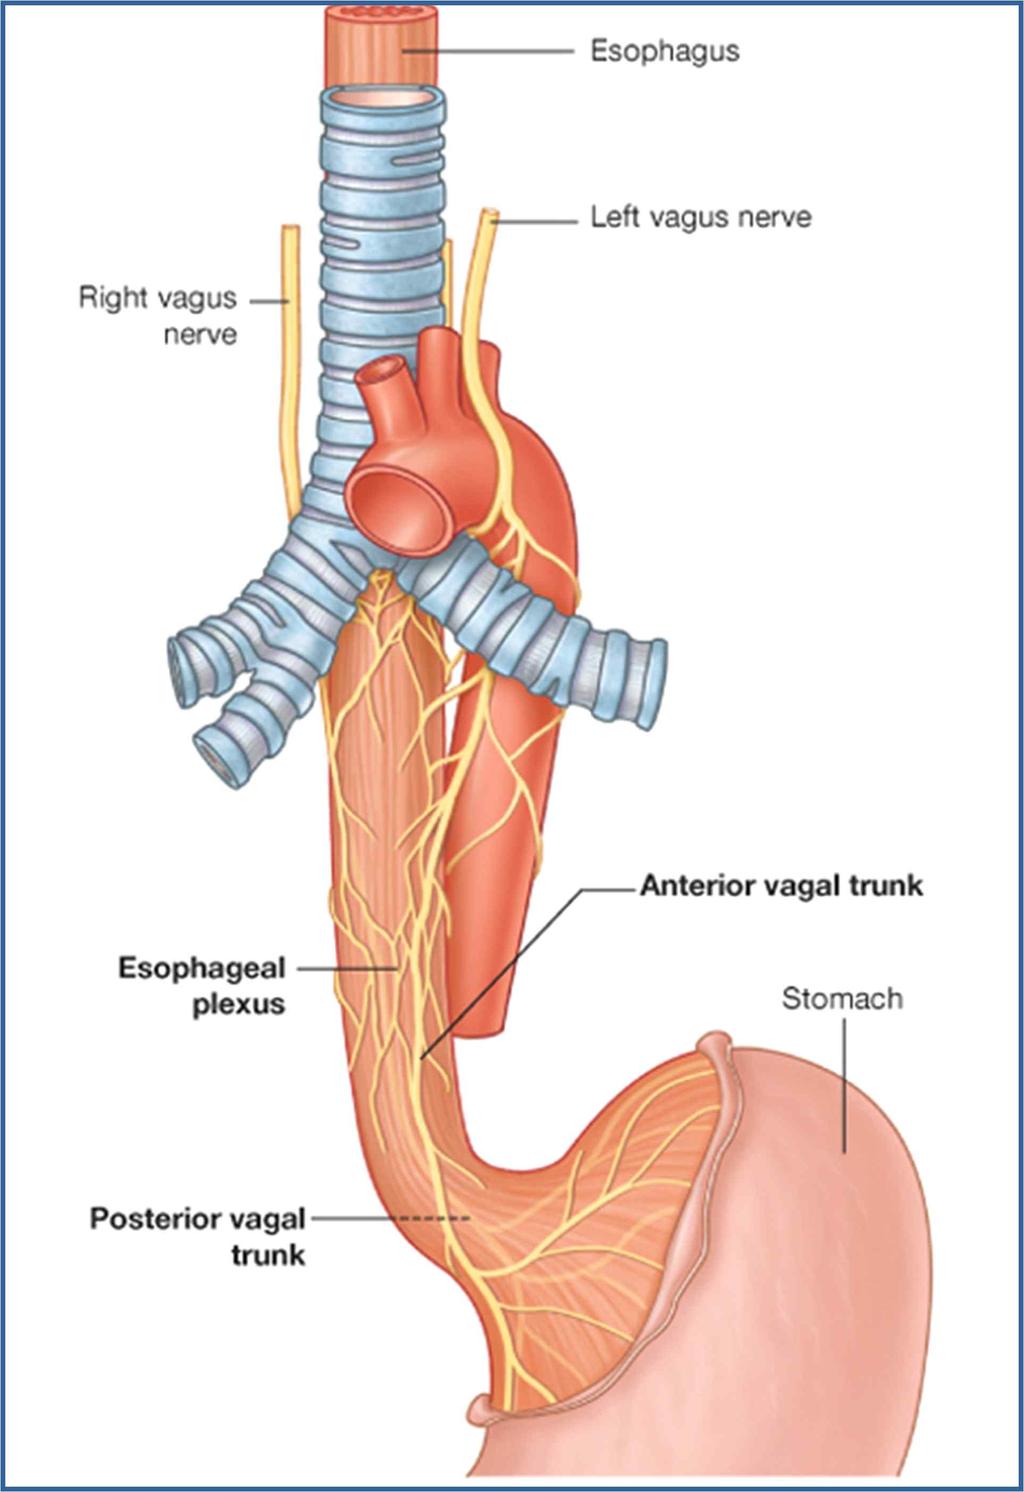 Esophageal Plexus 횡격막하부는왼쪽의앞미주신경줄기가앞위가지 (anterior gastric branch) 와간가지 (hepatic branch) 로분지되며,